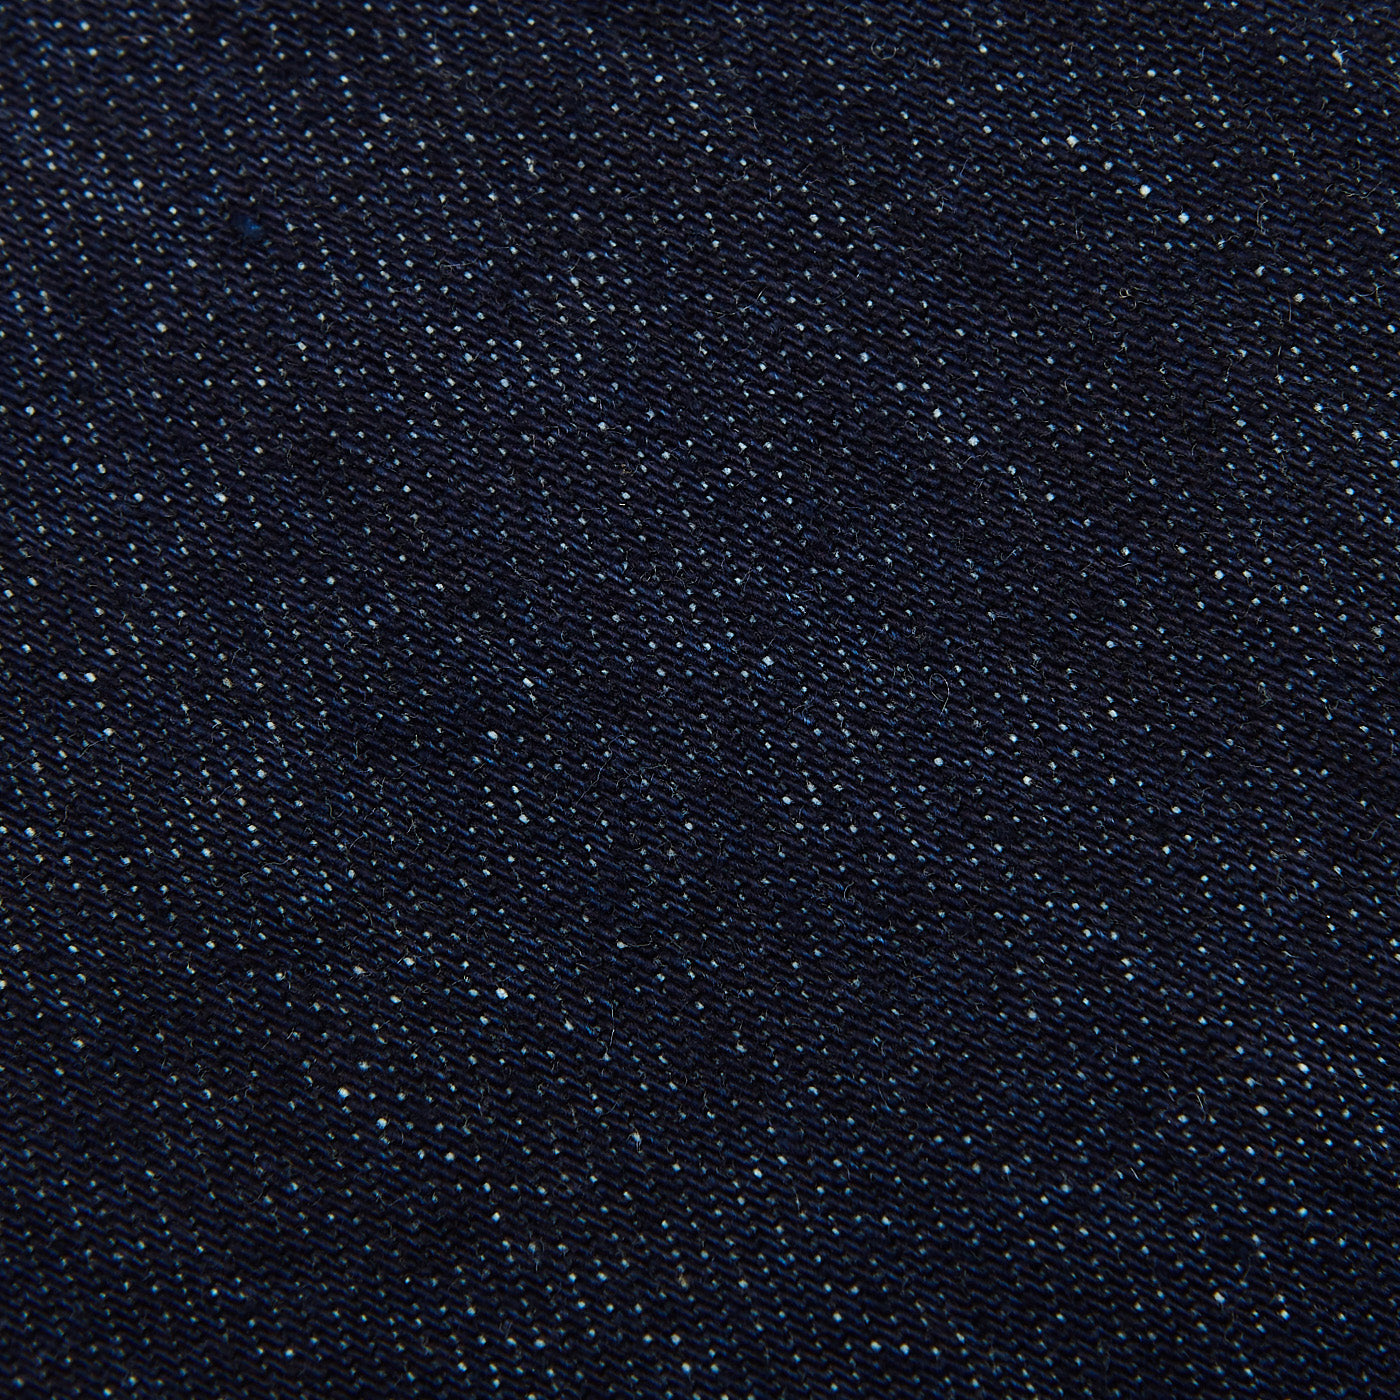 C.O.F Studio Blue Rinsed Organic Candiani Cotton M7 Jeans Fabric